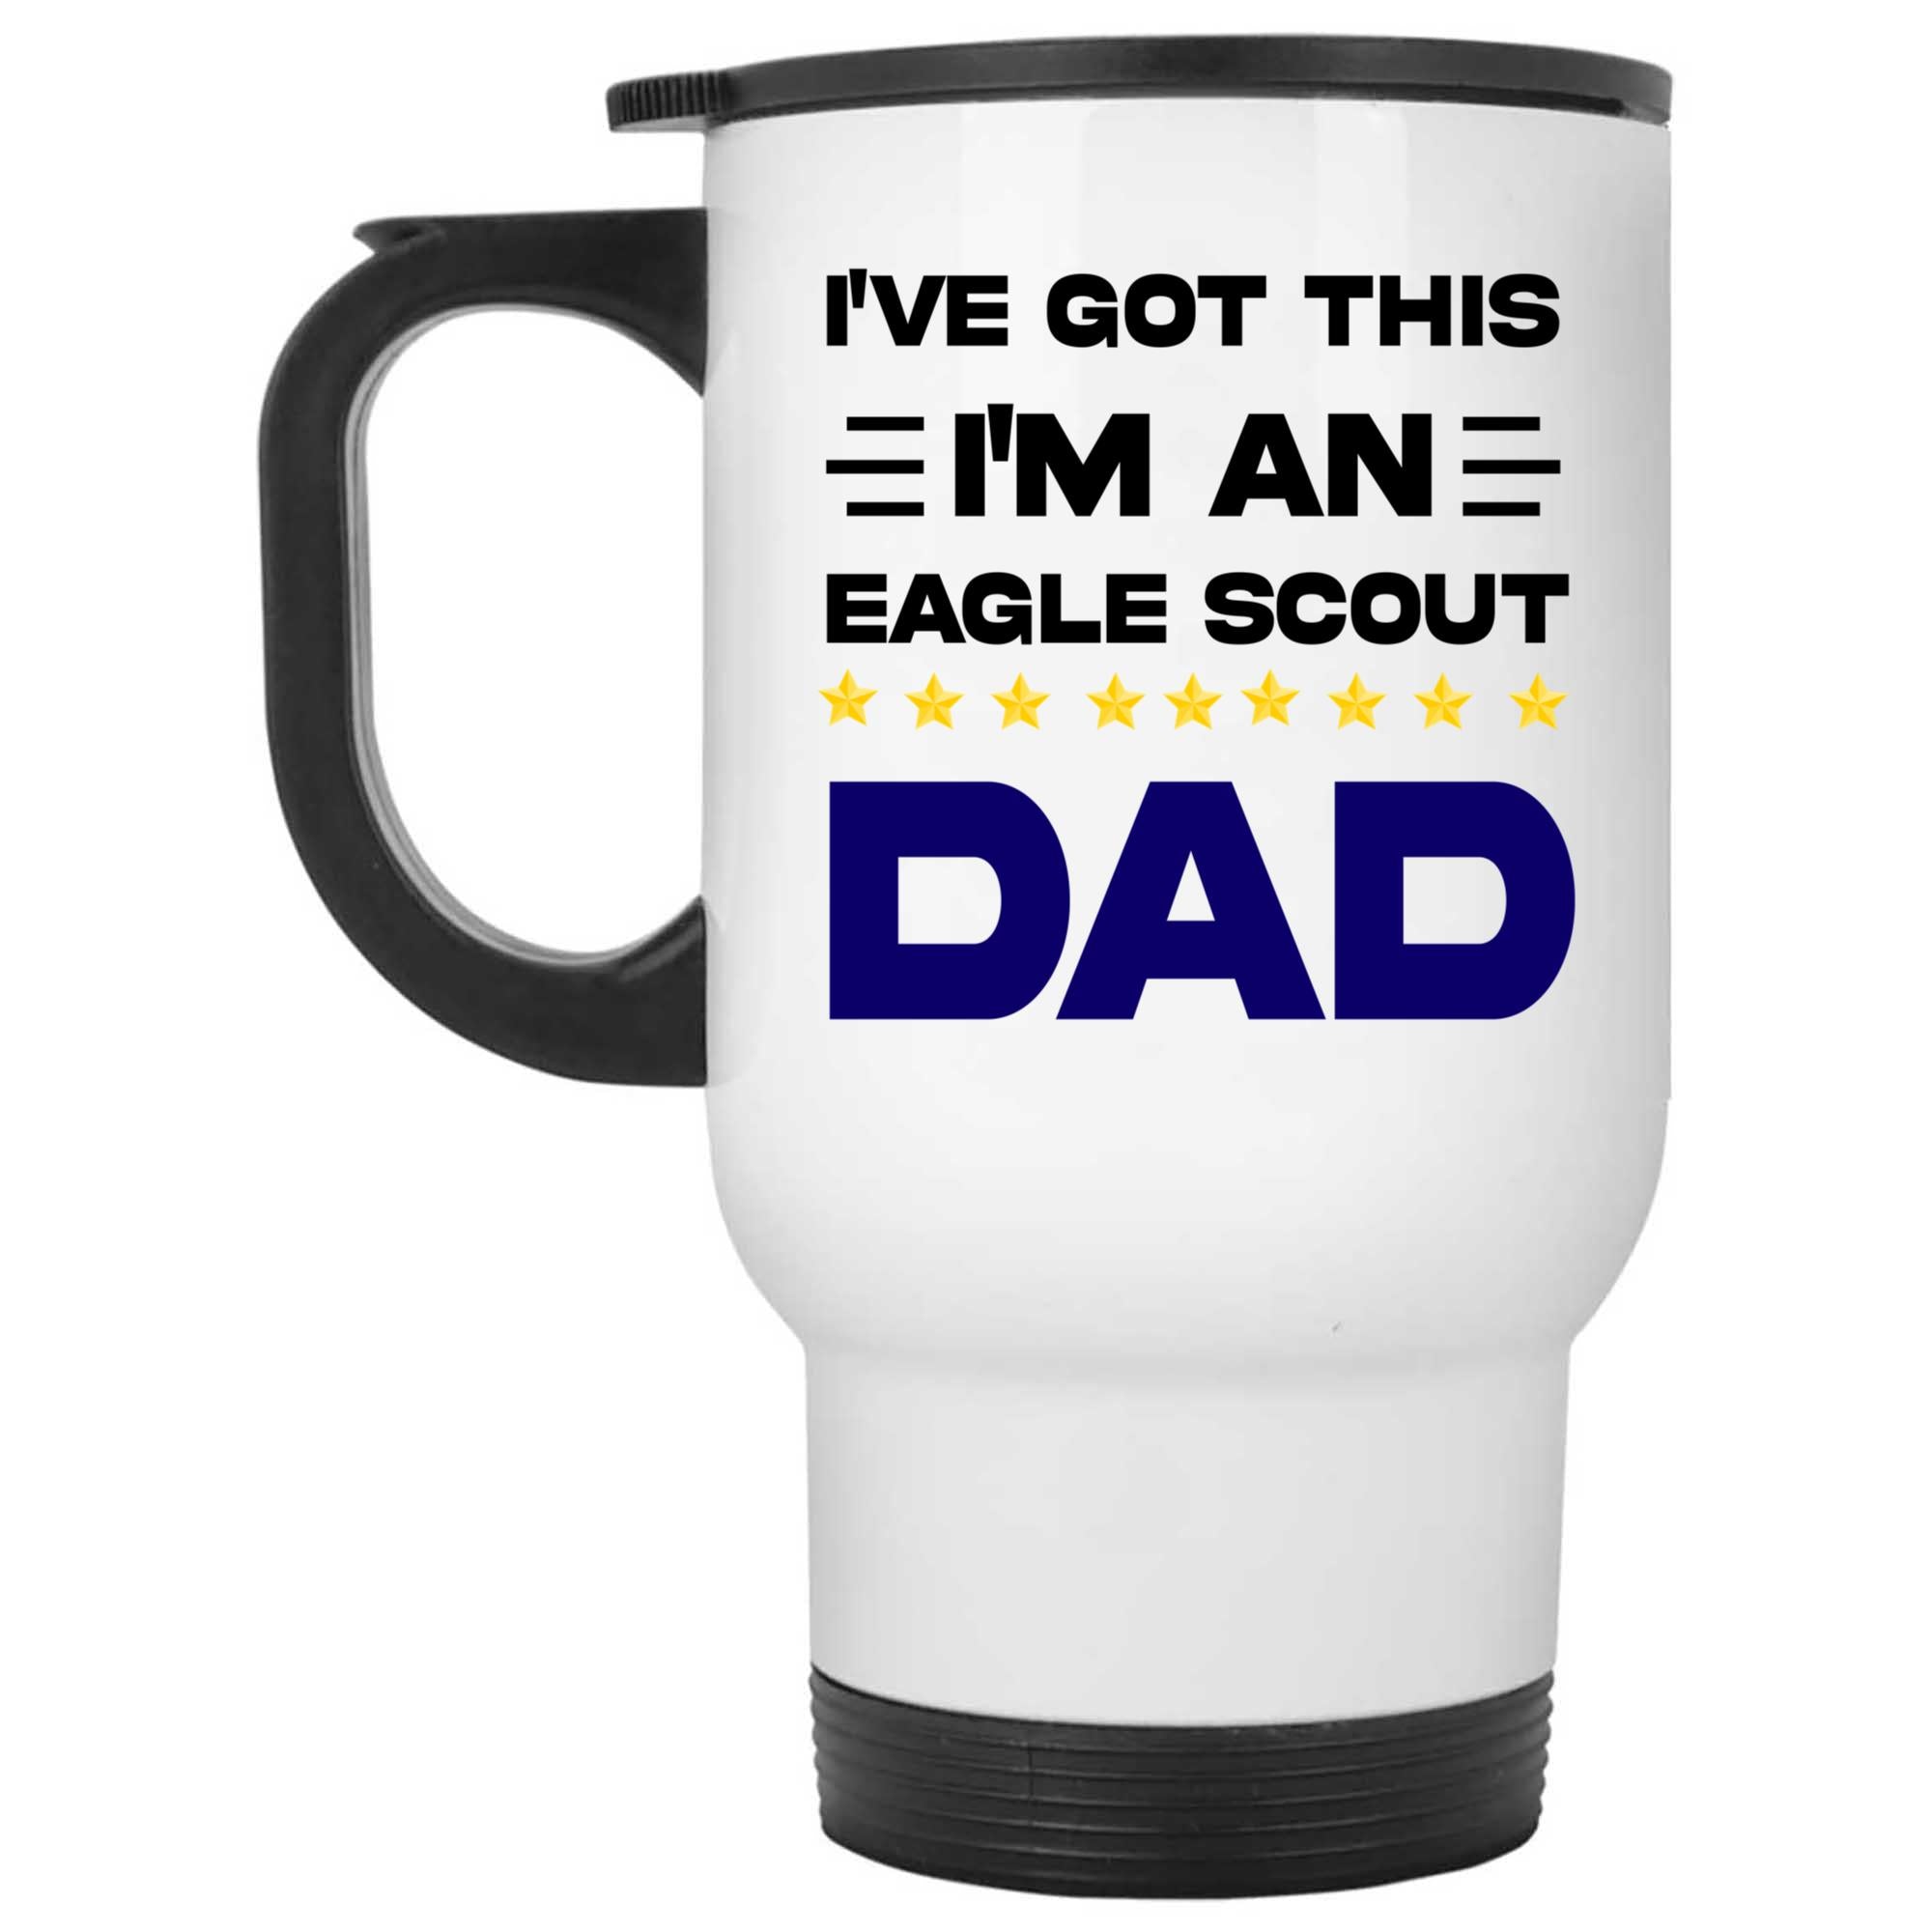 Skitongifts Coffee Mug Funny Ceramic Novelty M25-Kl131221-I've Got This I'm An Eagle Scout Dad Appreciation American Leader R1Aq1D6